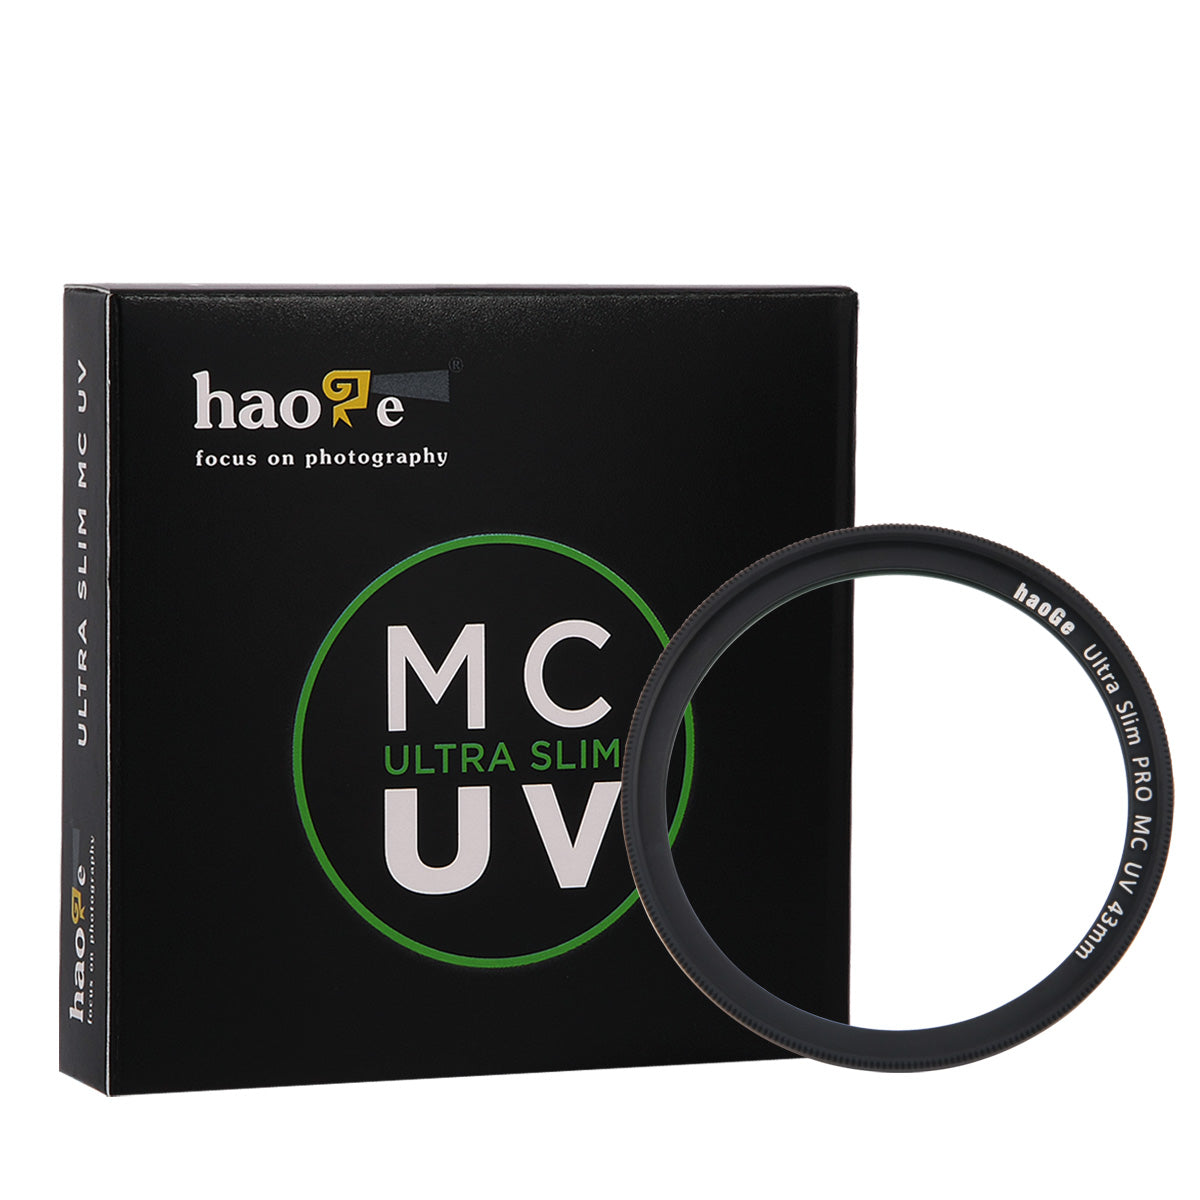 Haoge 43mm Ultra Slim MC UV Protection Multicoated Ultraviolet Lens Filter for Canon Nikon Sony Minolta Pentax Olympus Panasonic Leica Zeiss Tamron Digital Camera DSLR Lens